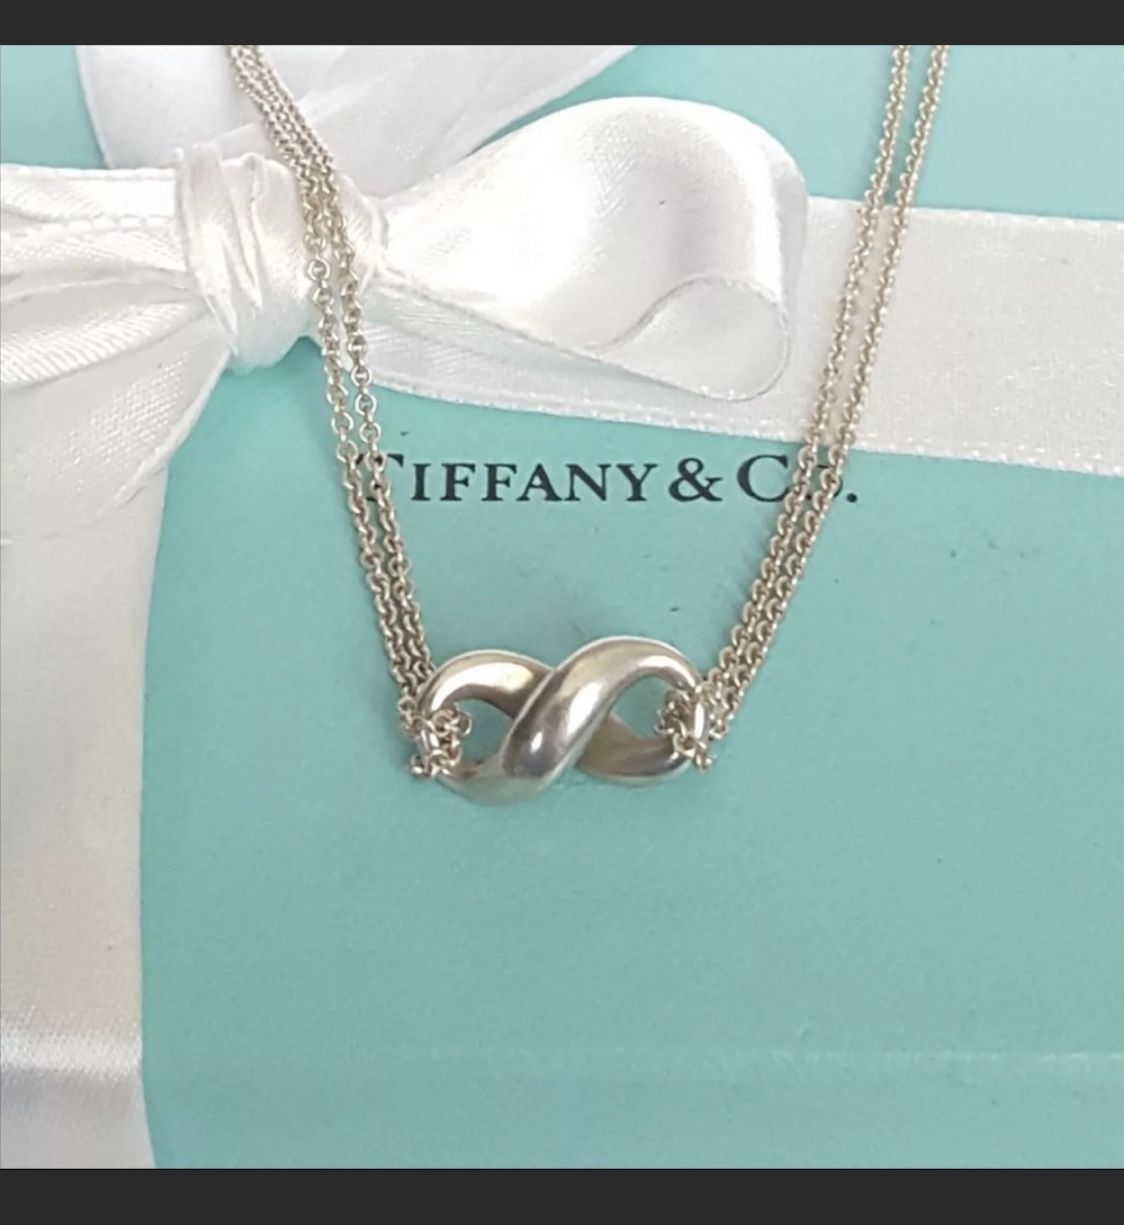 Tiffany’s infinity necklace